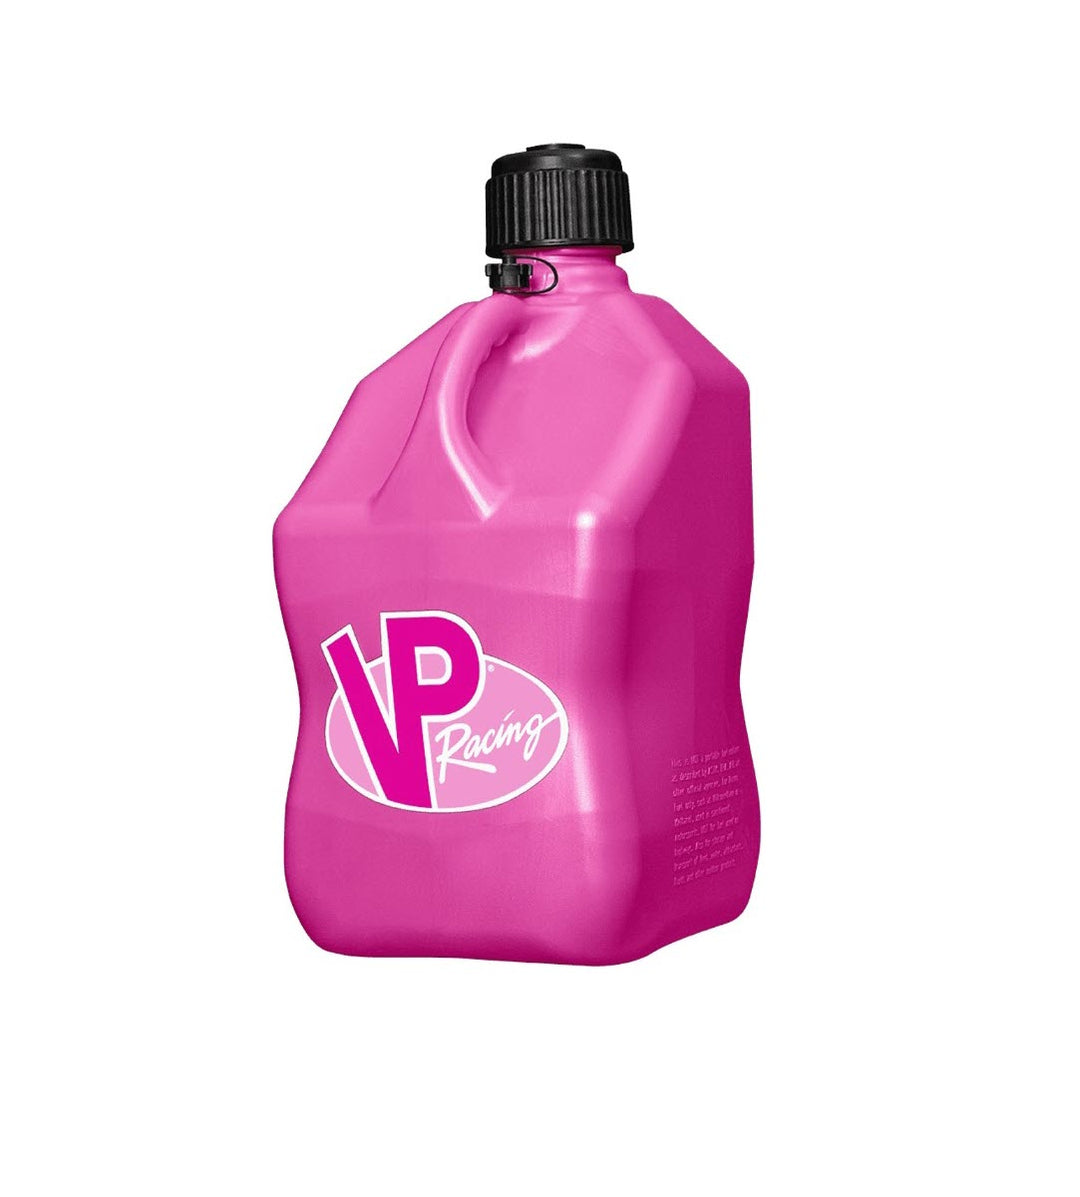 VP Racing 5.5-Gallon Motorsport Container - Pink Jug, Black Cap - Dirty Racing Products